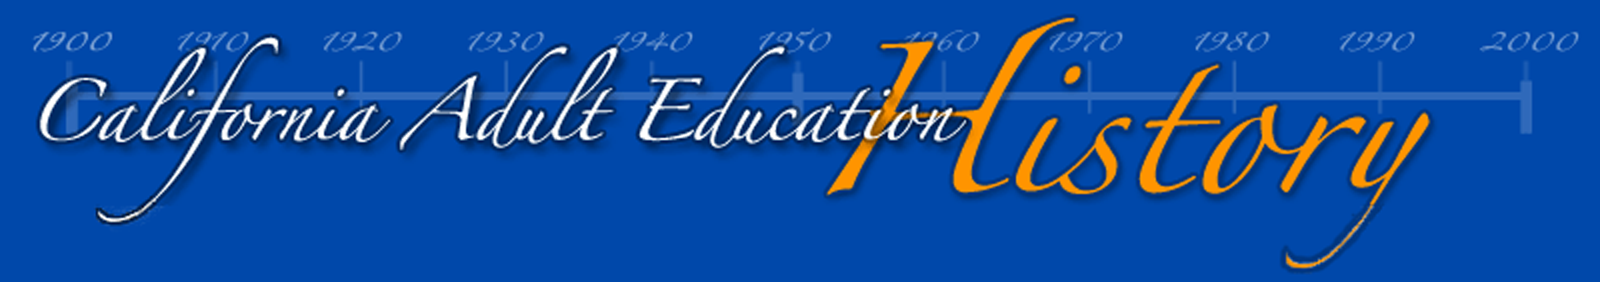 California Adult Education History logo